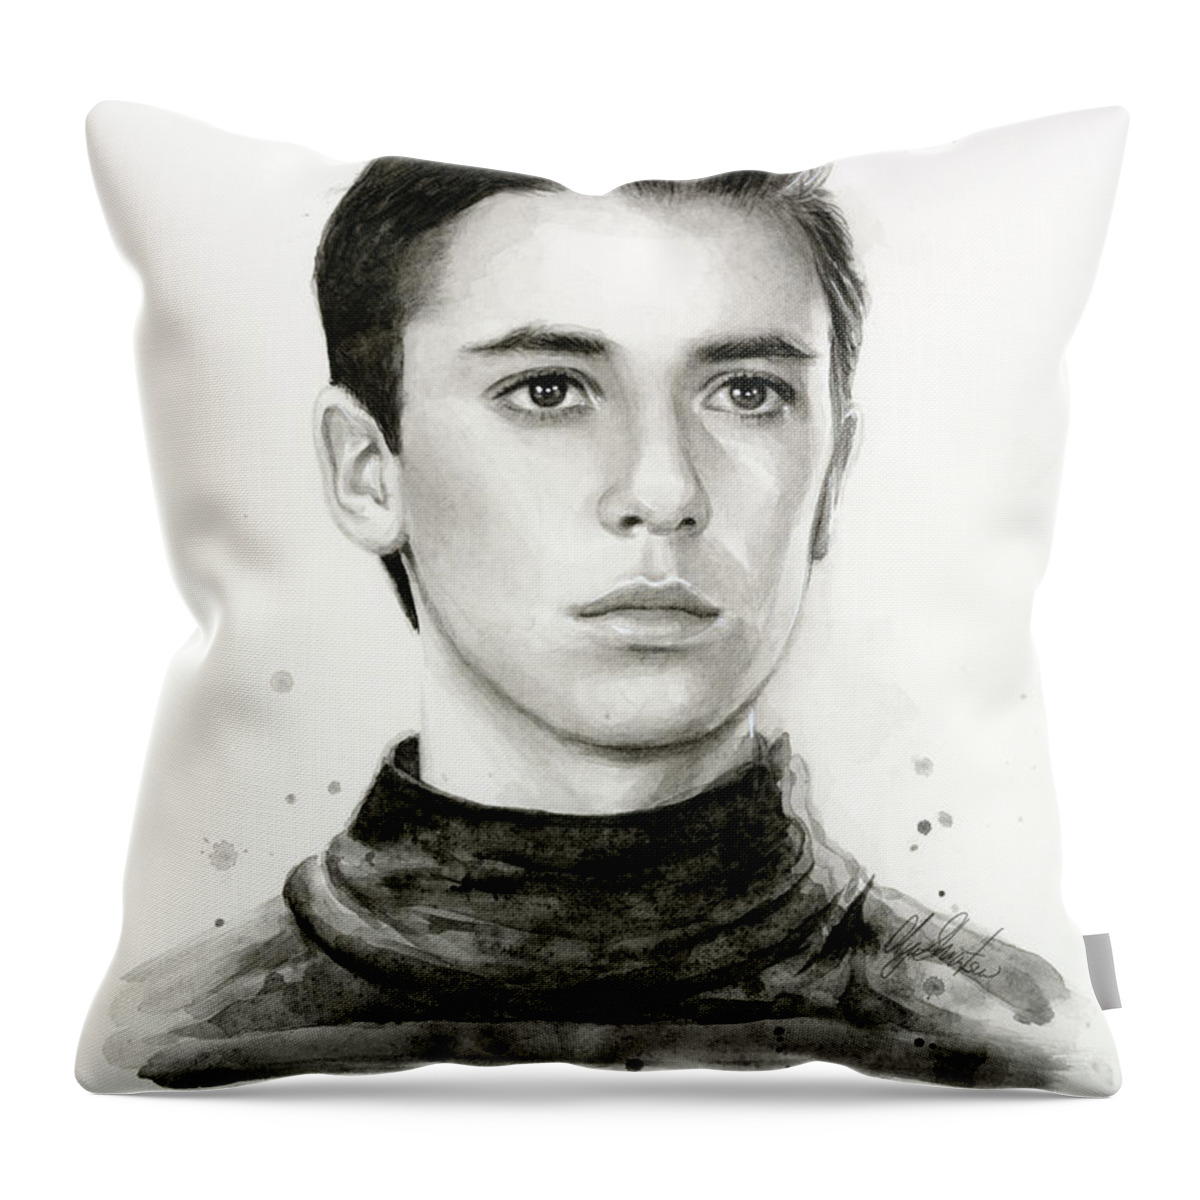 Wesley Throw Pillow featuring the painting Wesley Crusher Star Trek Fan Art by Olga Shvartsur